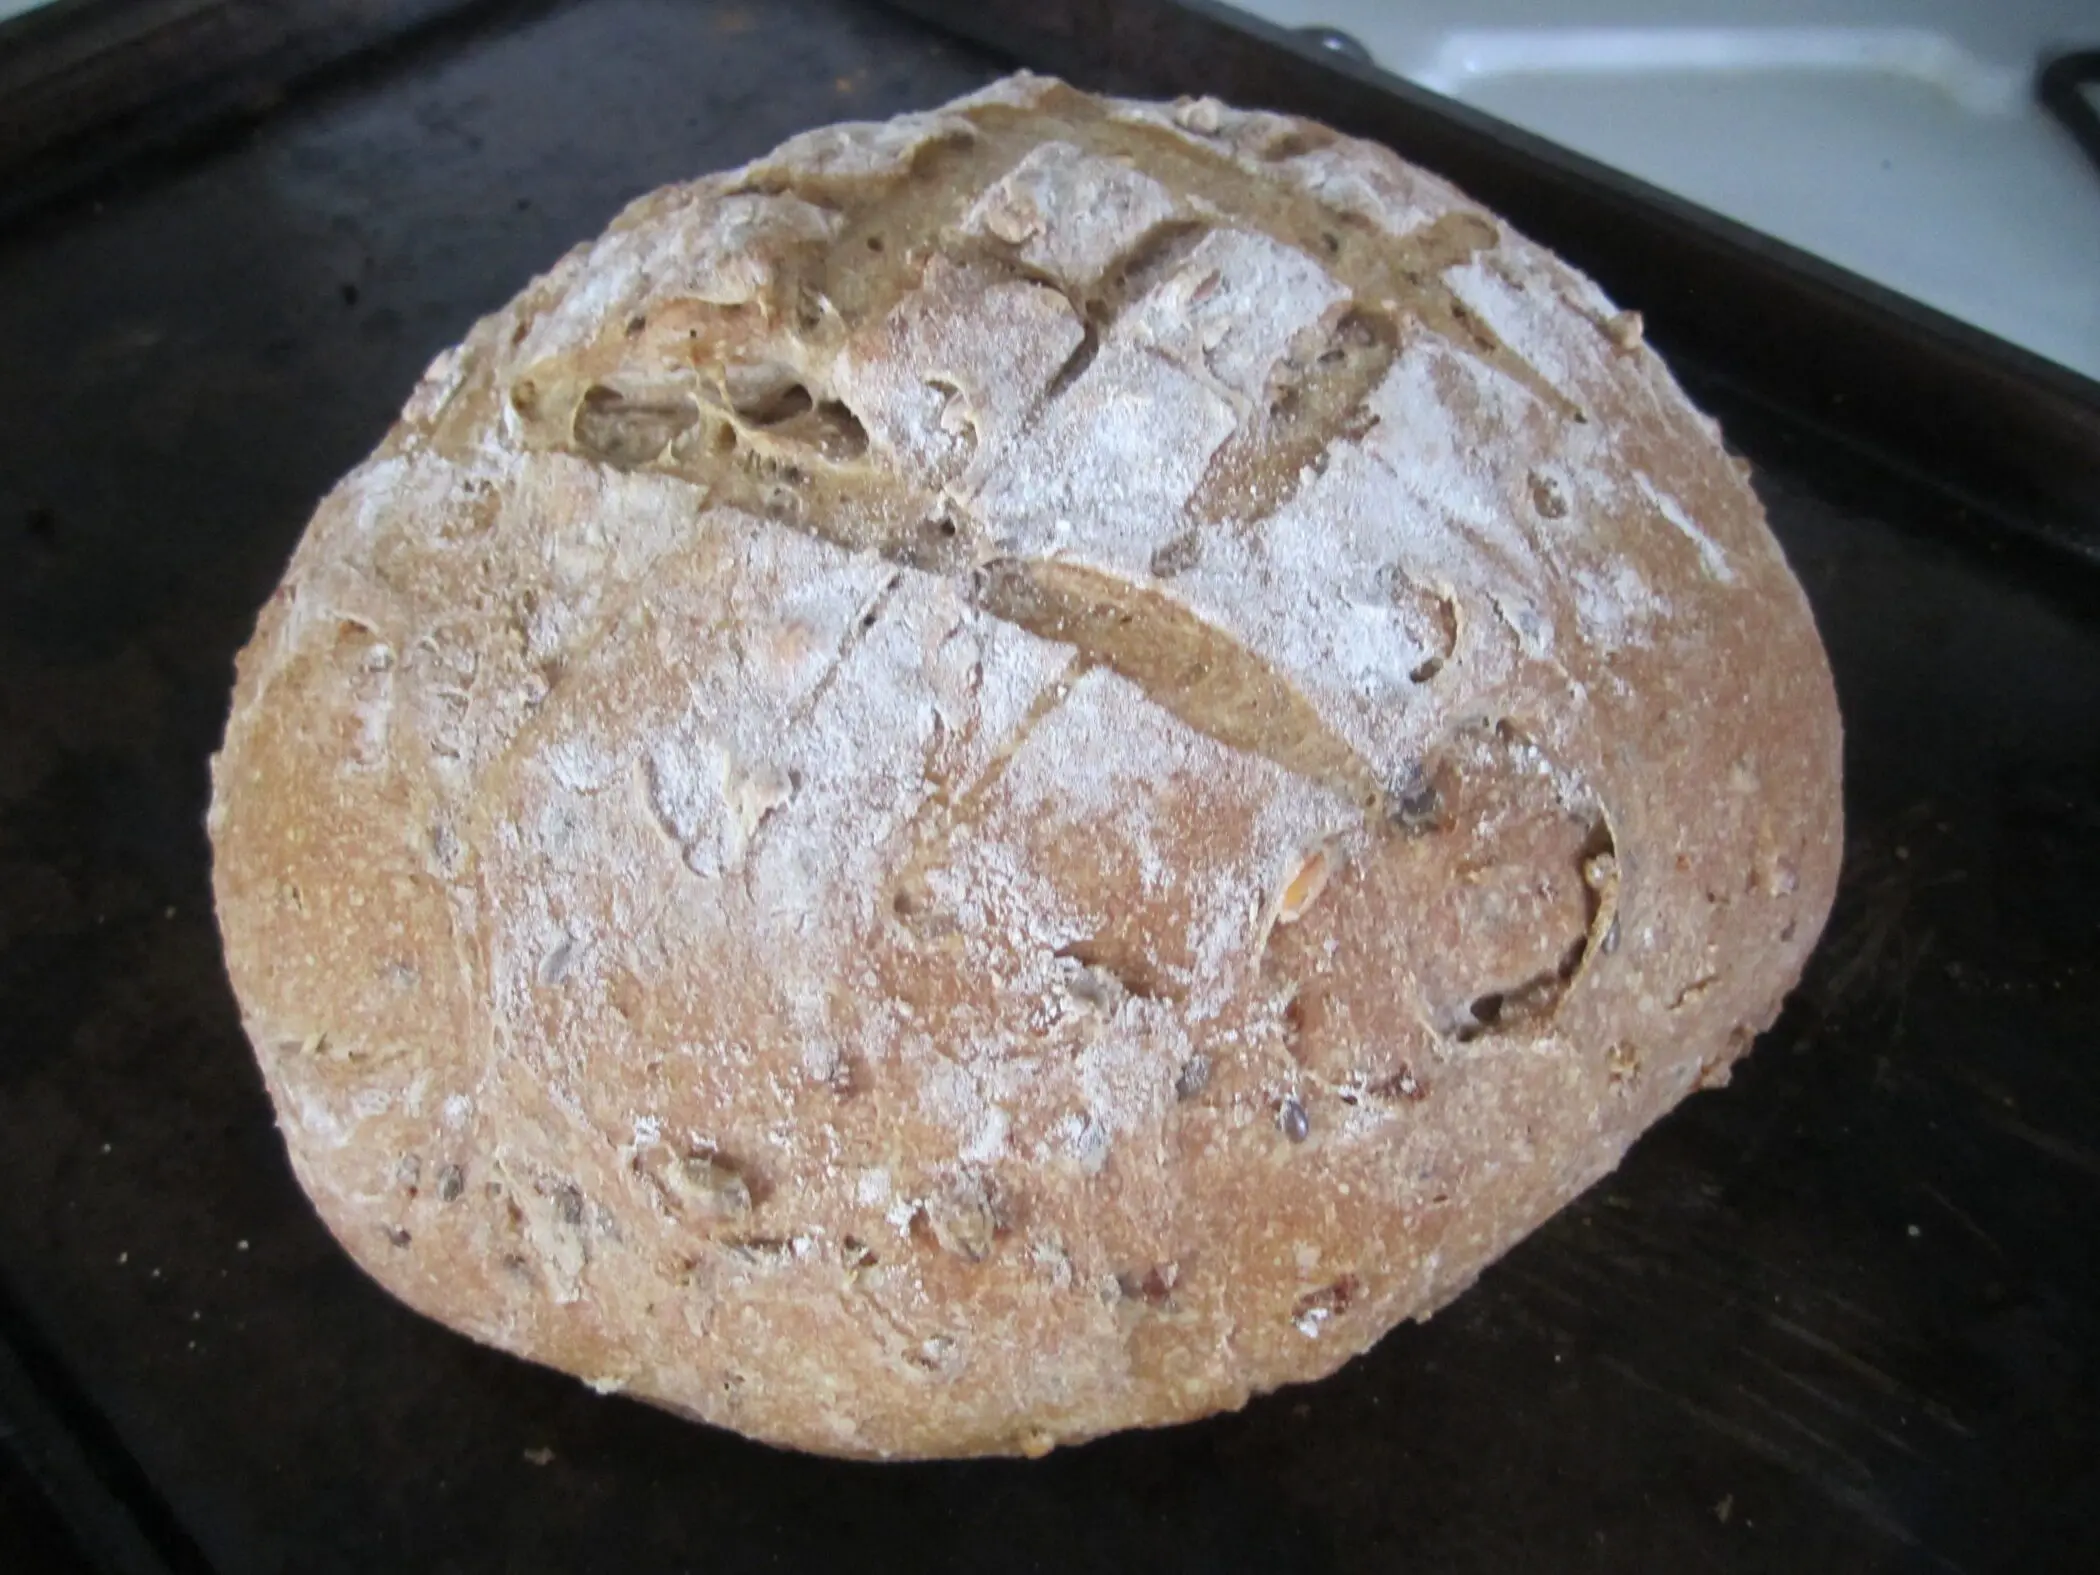 baked loaf of multigrain bread